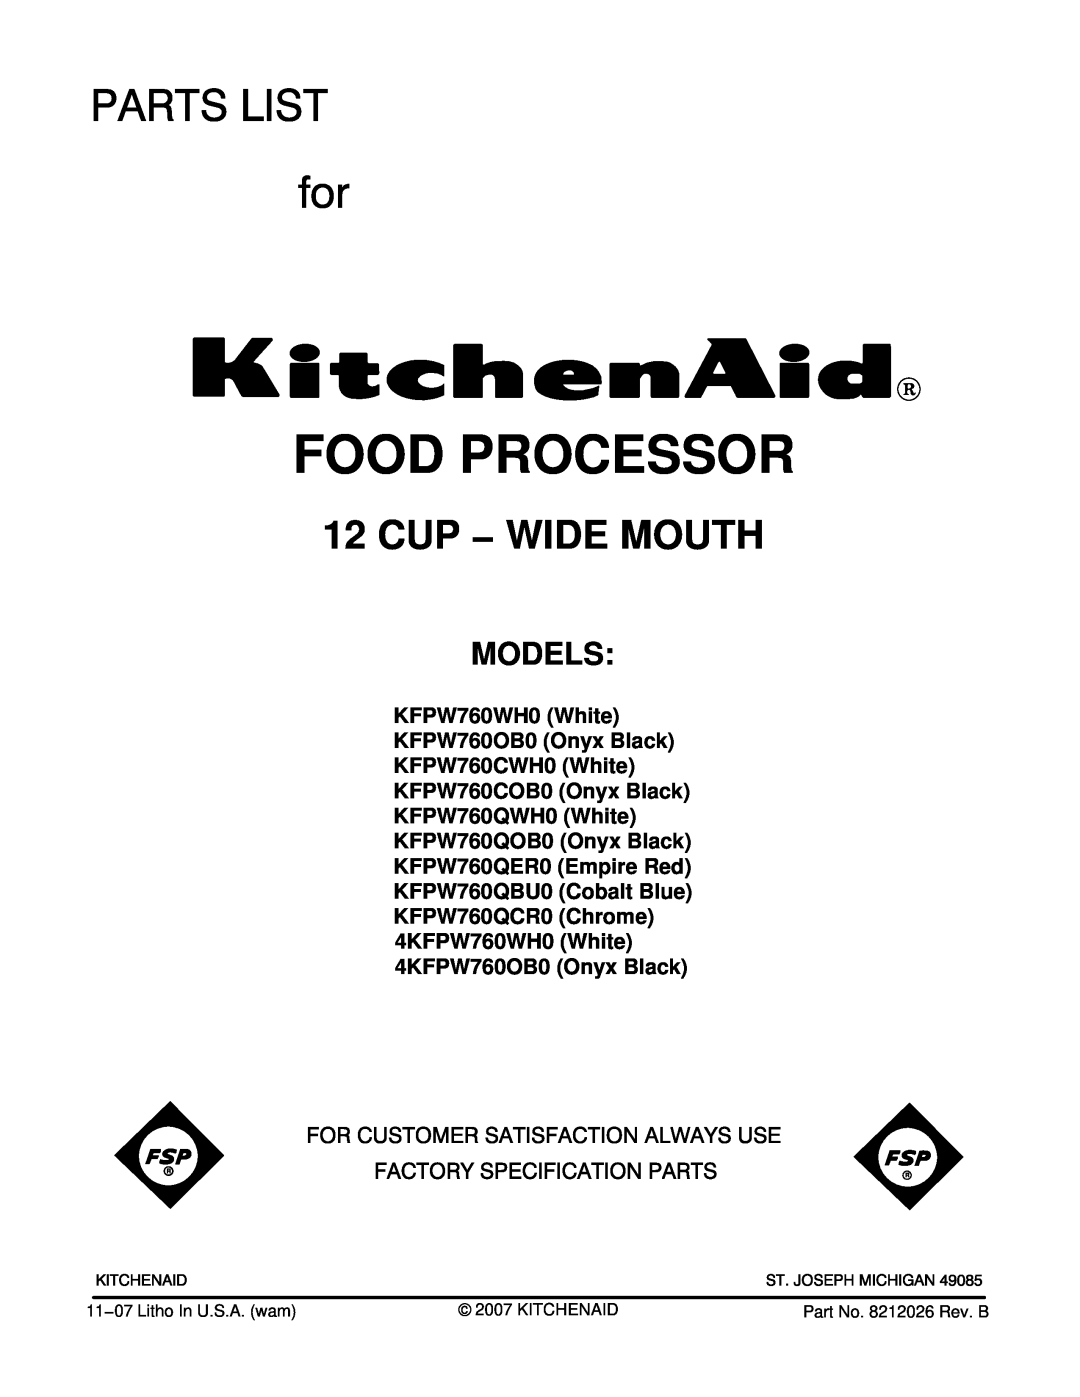 KitchenAid KFPW760QBU0 manual KFPW760WH0 White KFPW760OB0 Onyx Black KFPW760CWH0 White, Food Processor, Cup − Wide Mouth 